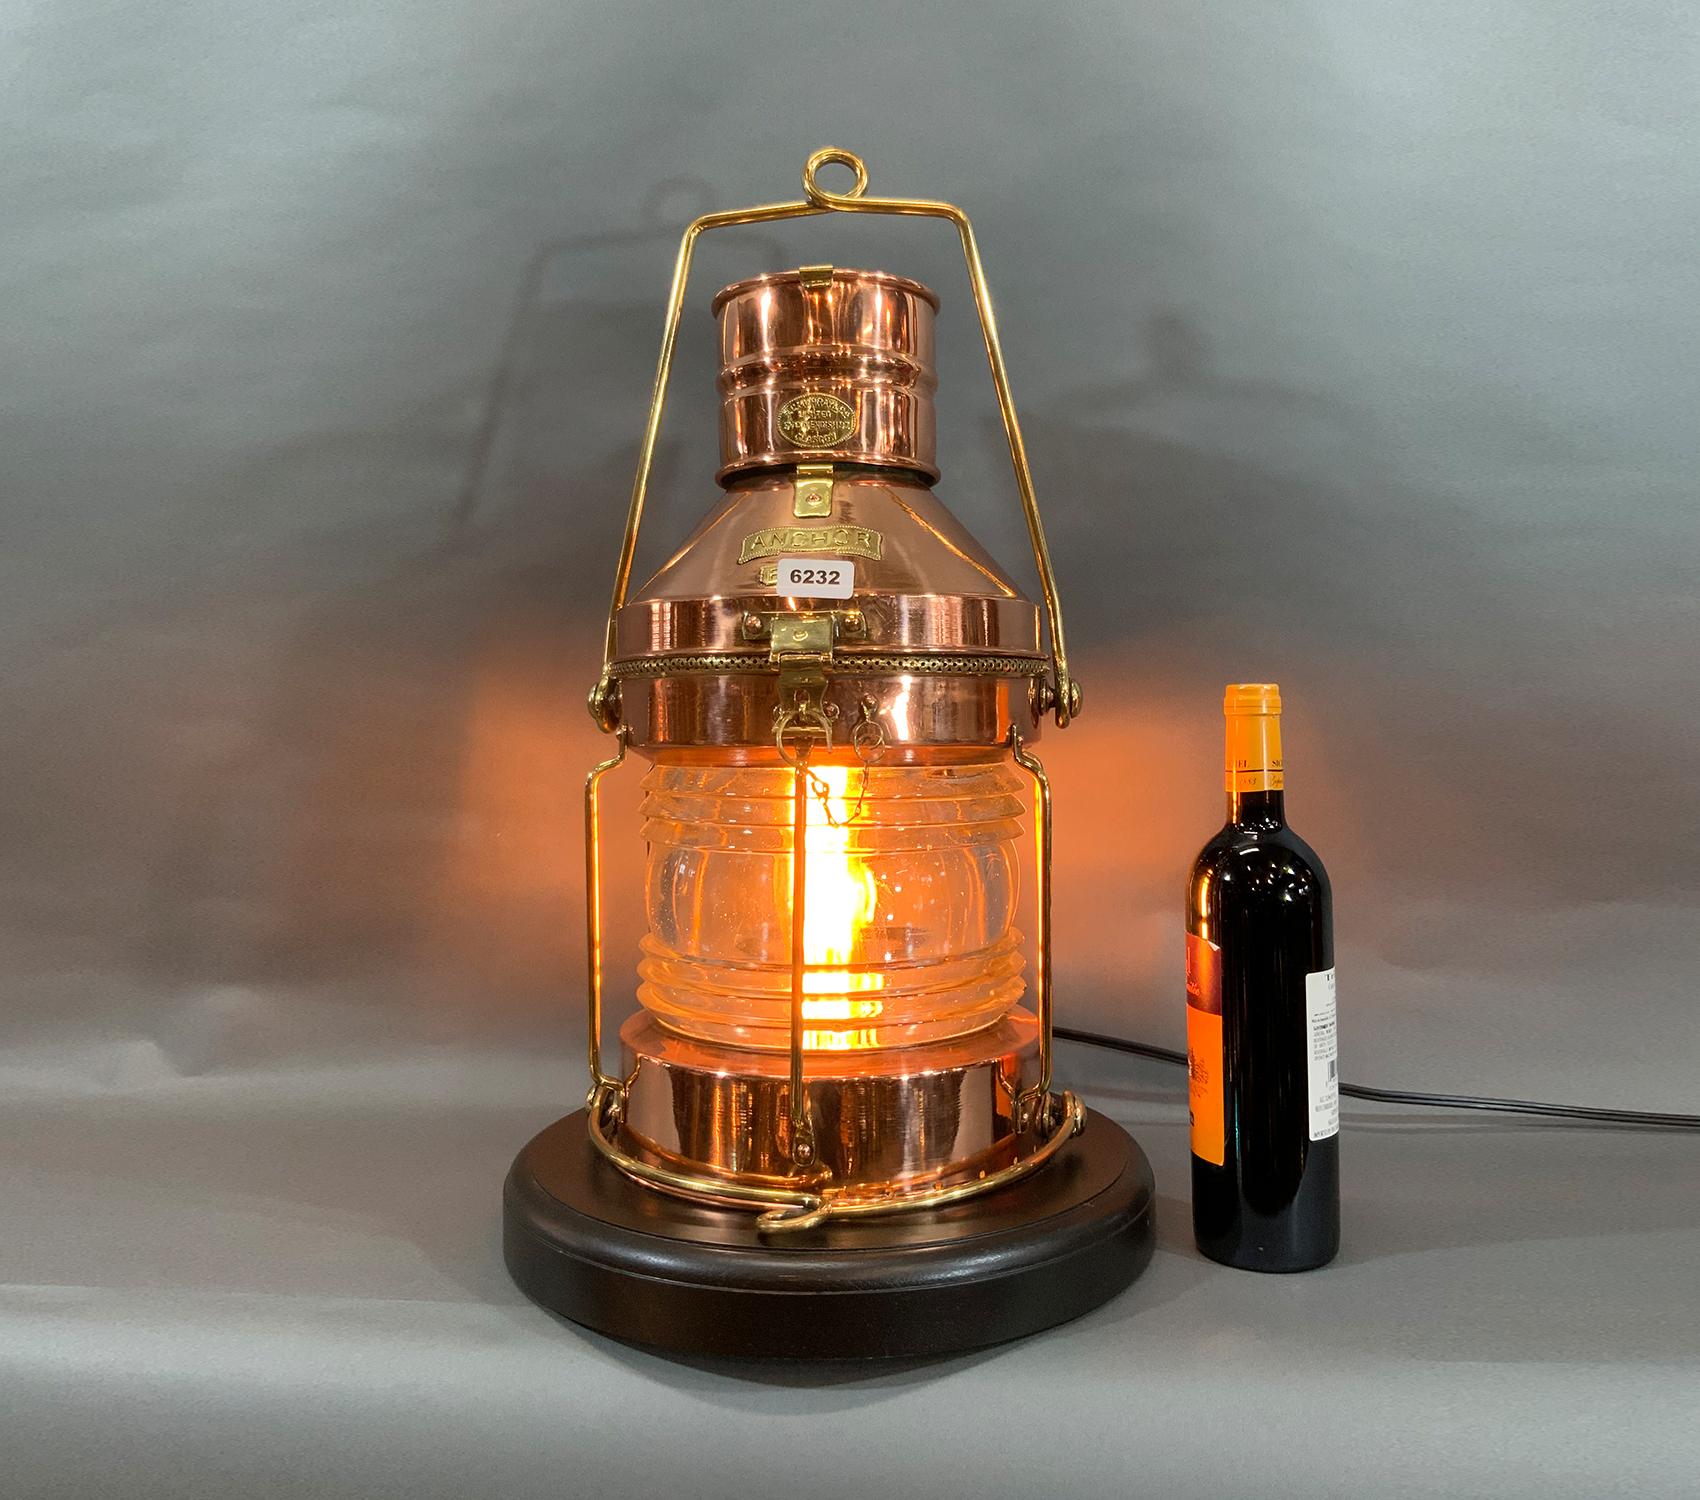 1930s lantern